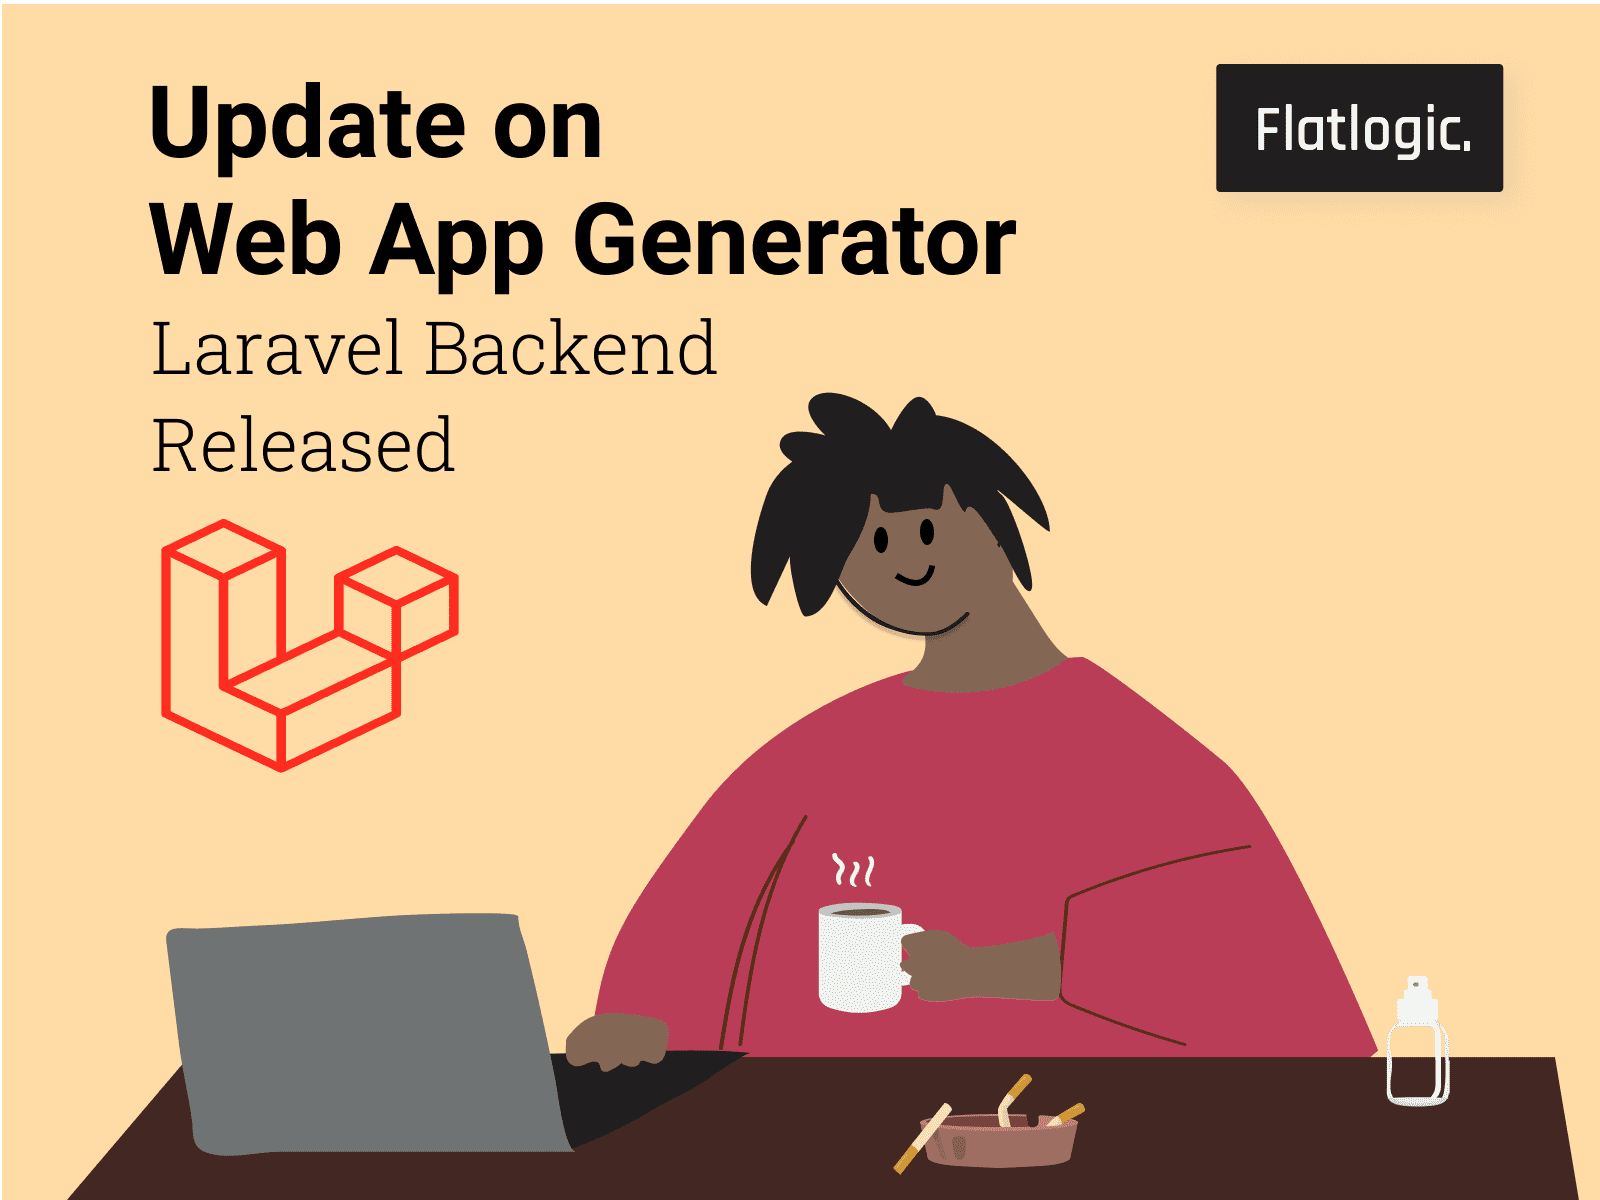 Next Update on Flatlogic Web App Generator; Vol. 2